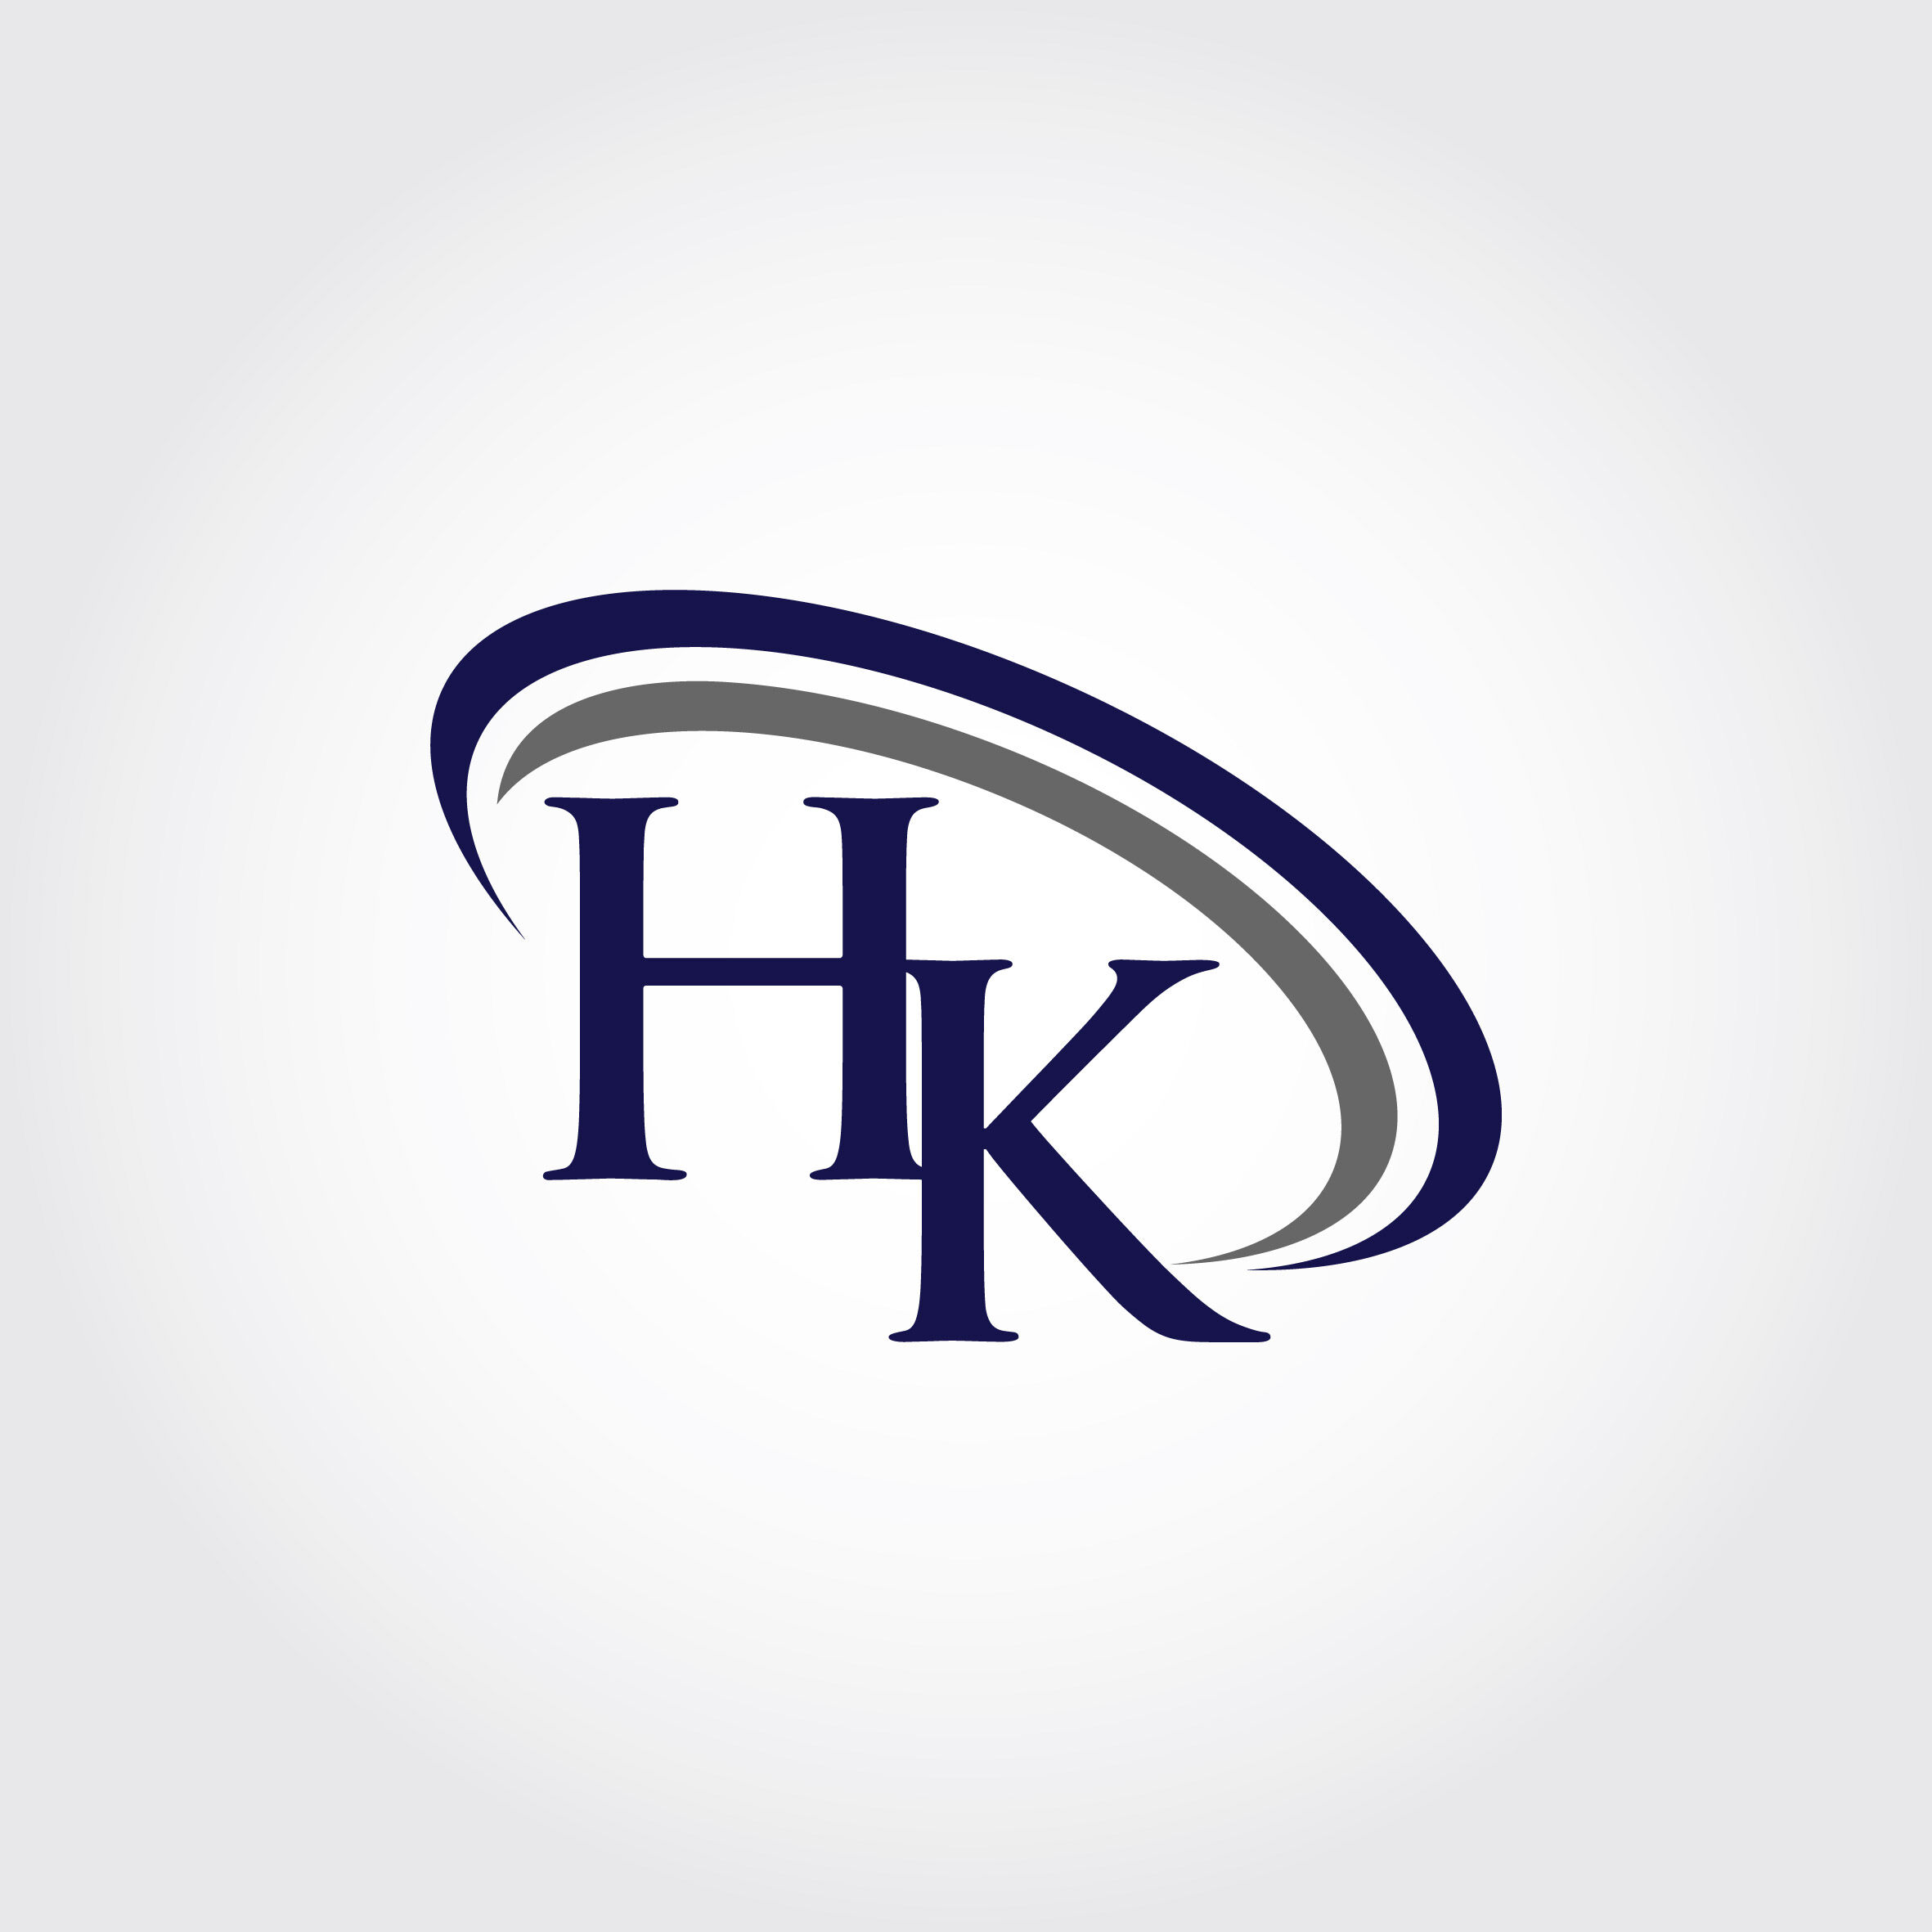 Monogram Hk Logo Design By Vectorseller Thehungryjpeg Com